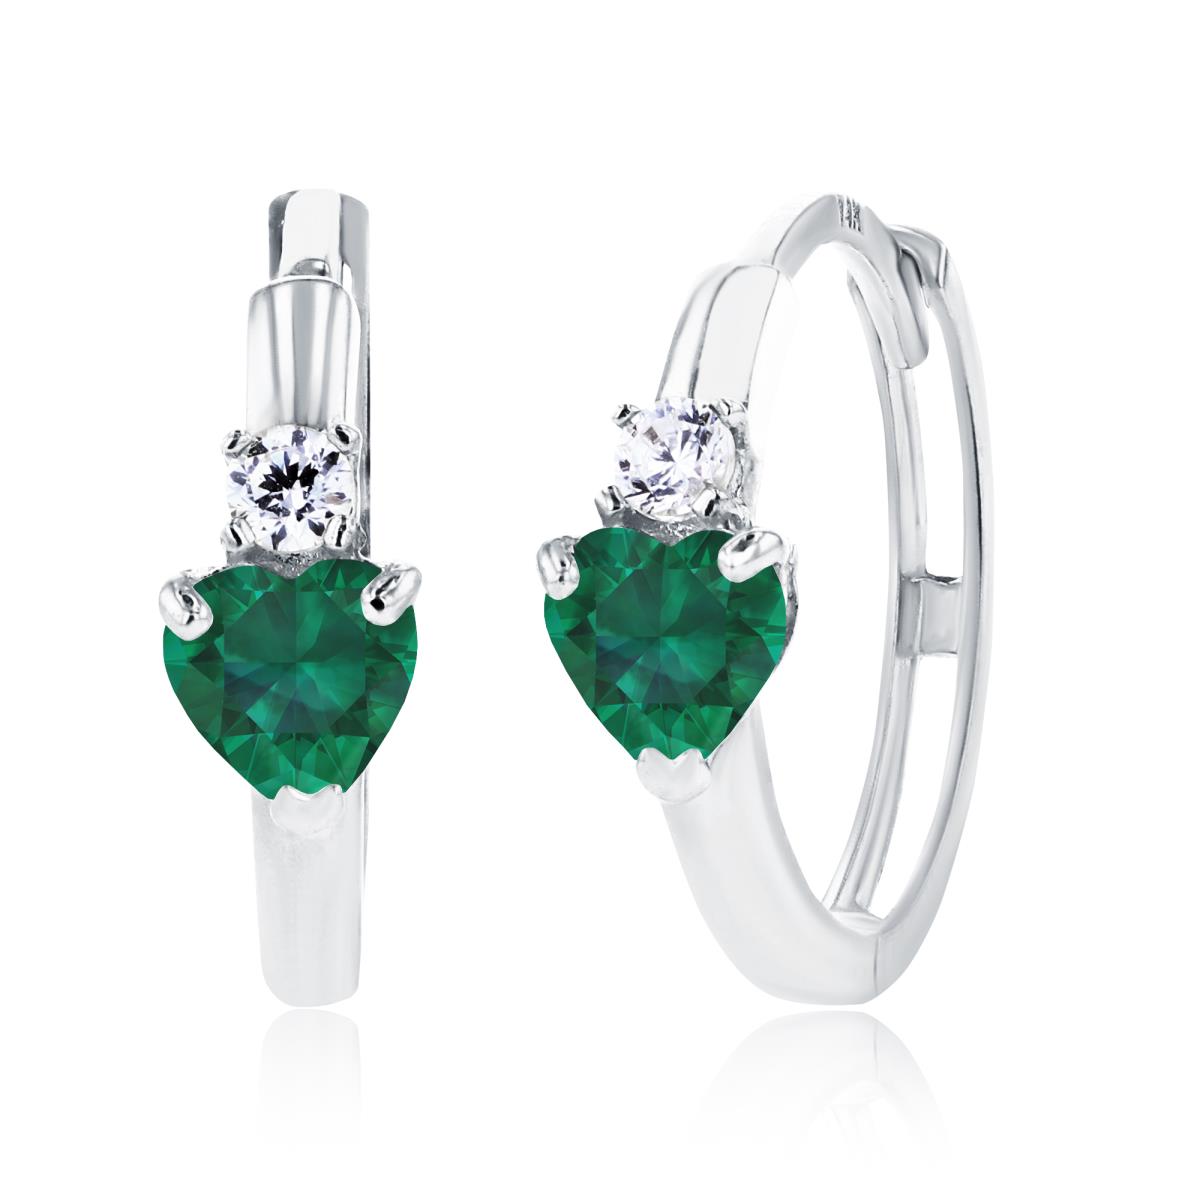 14K White Gold 4mm Heart Created Emerald & 2mm Created White Sapphire Huggie Earrings